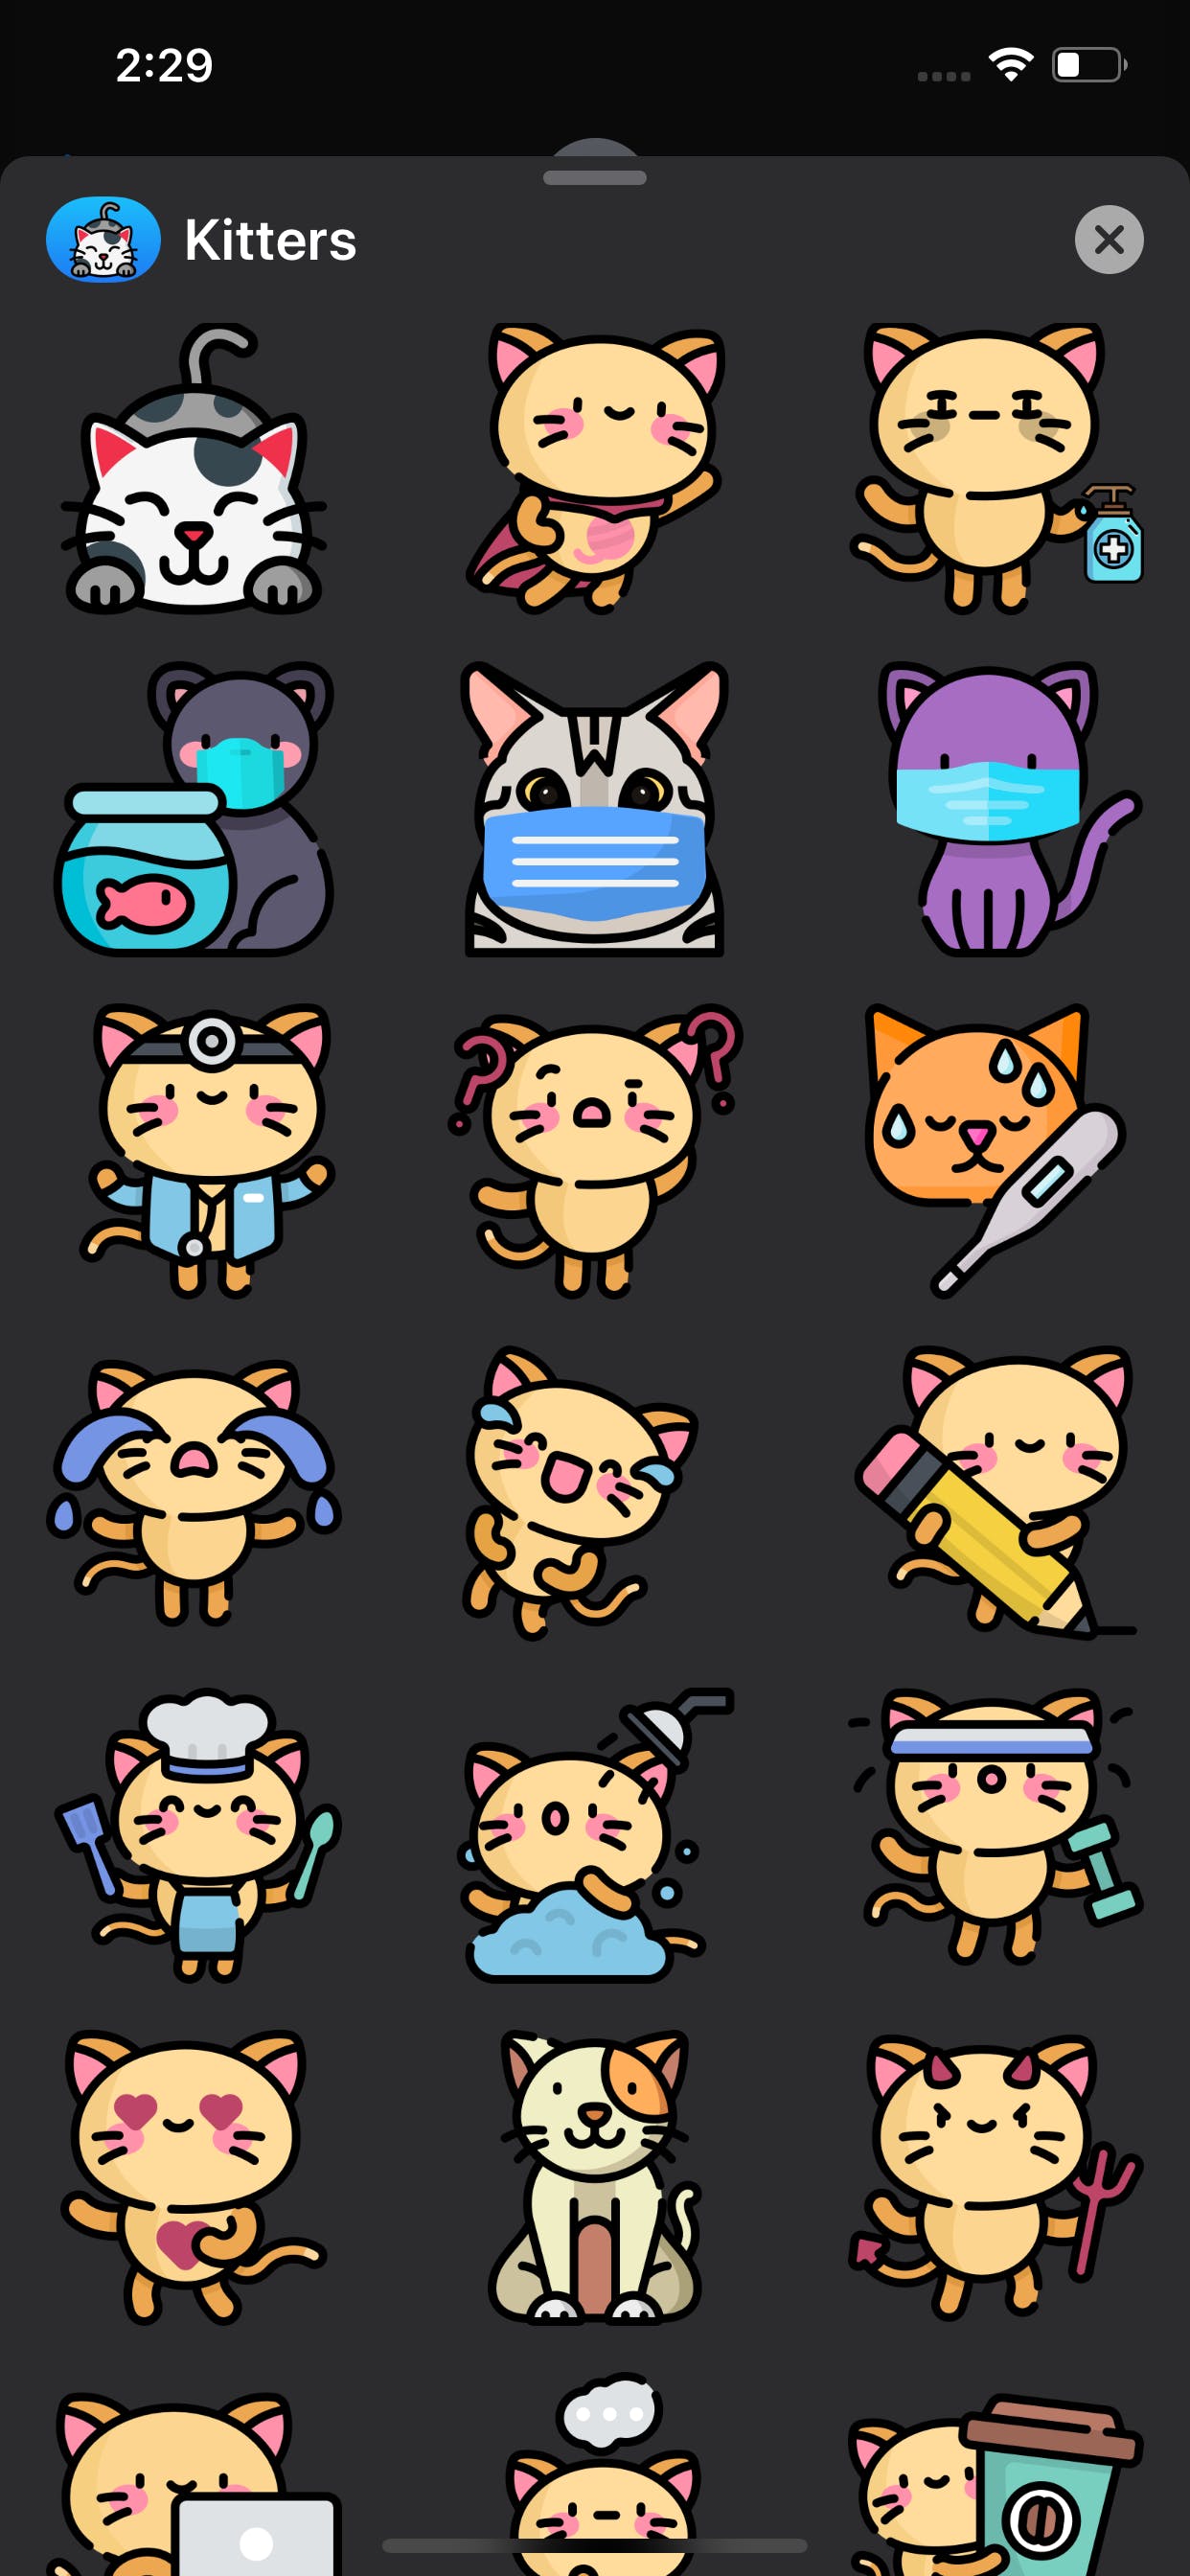 Kitters! iMessage Cat Stickers -AppStore media 2